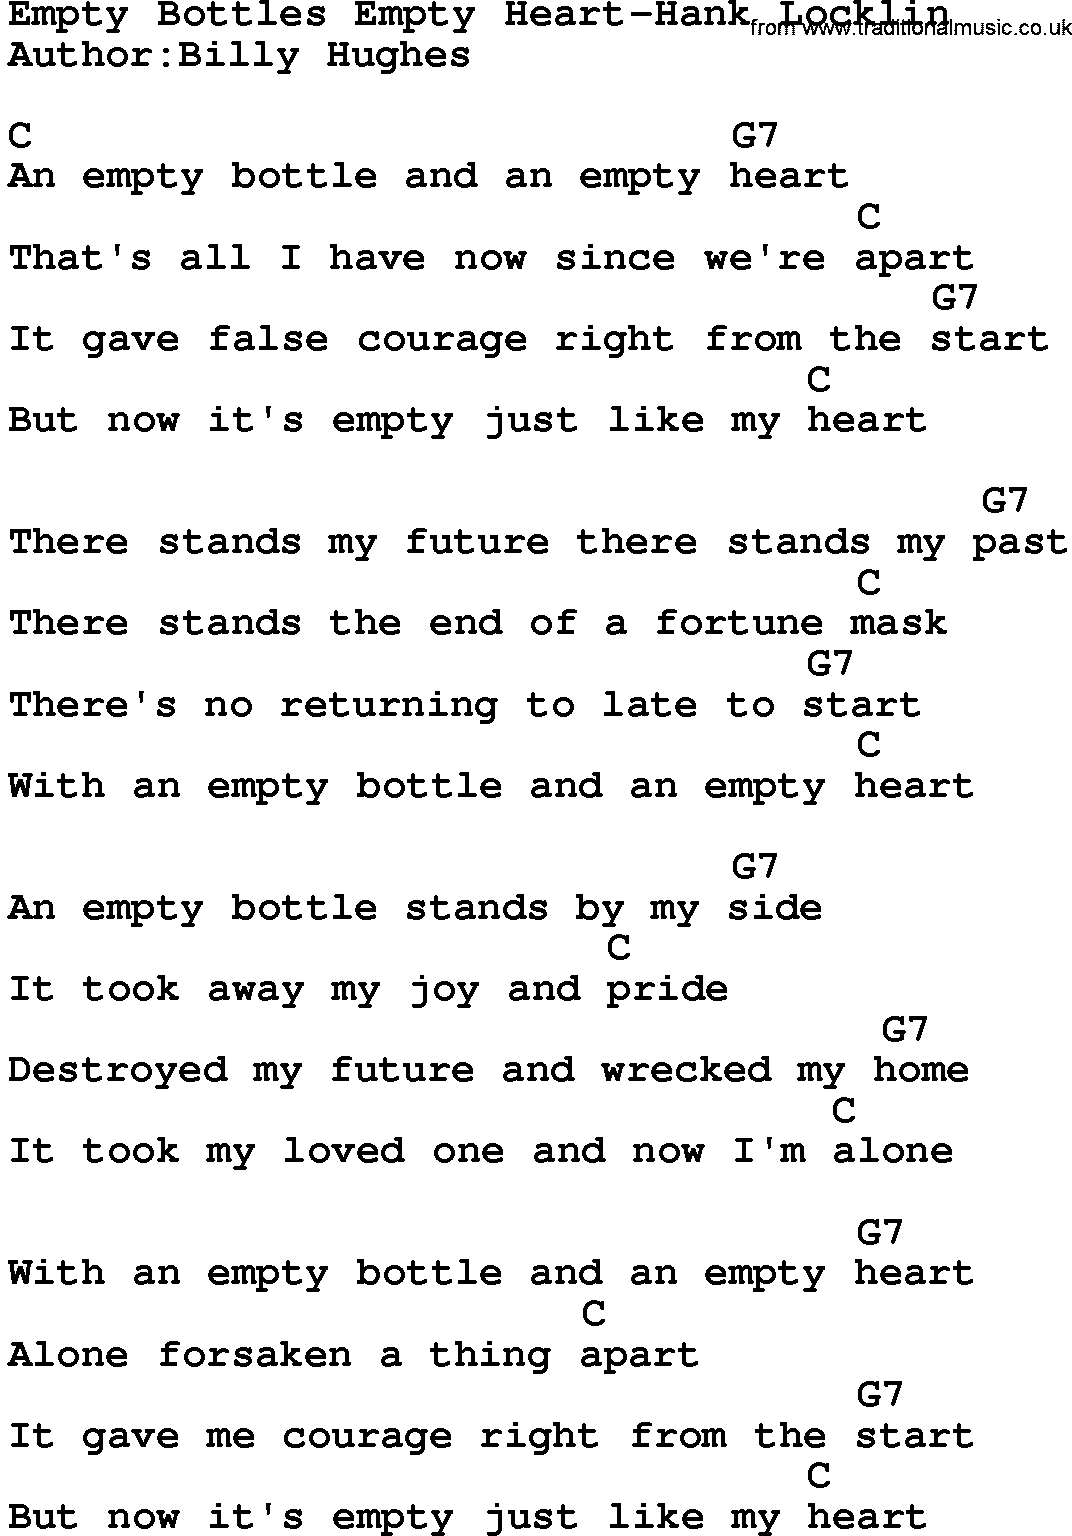 Country music song: Empty Bottles Empty Heart-Hank Locklin lyrics and chords